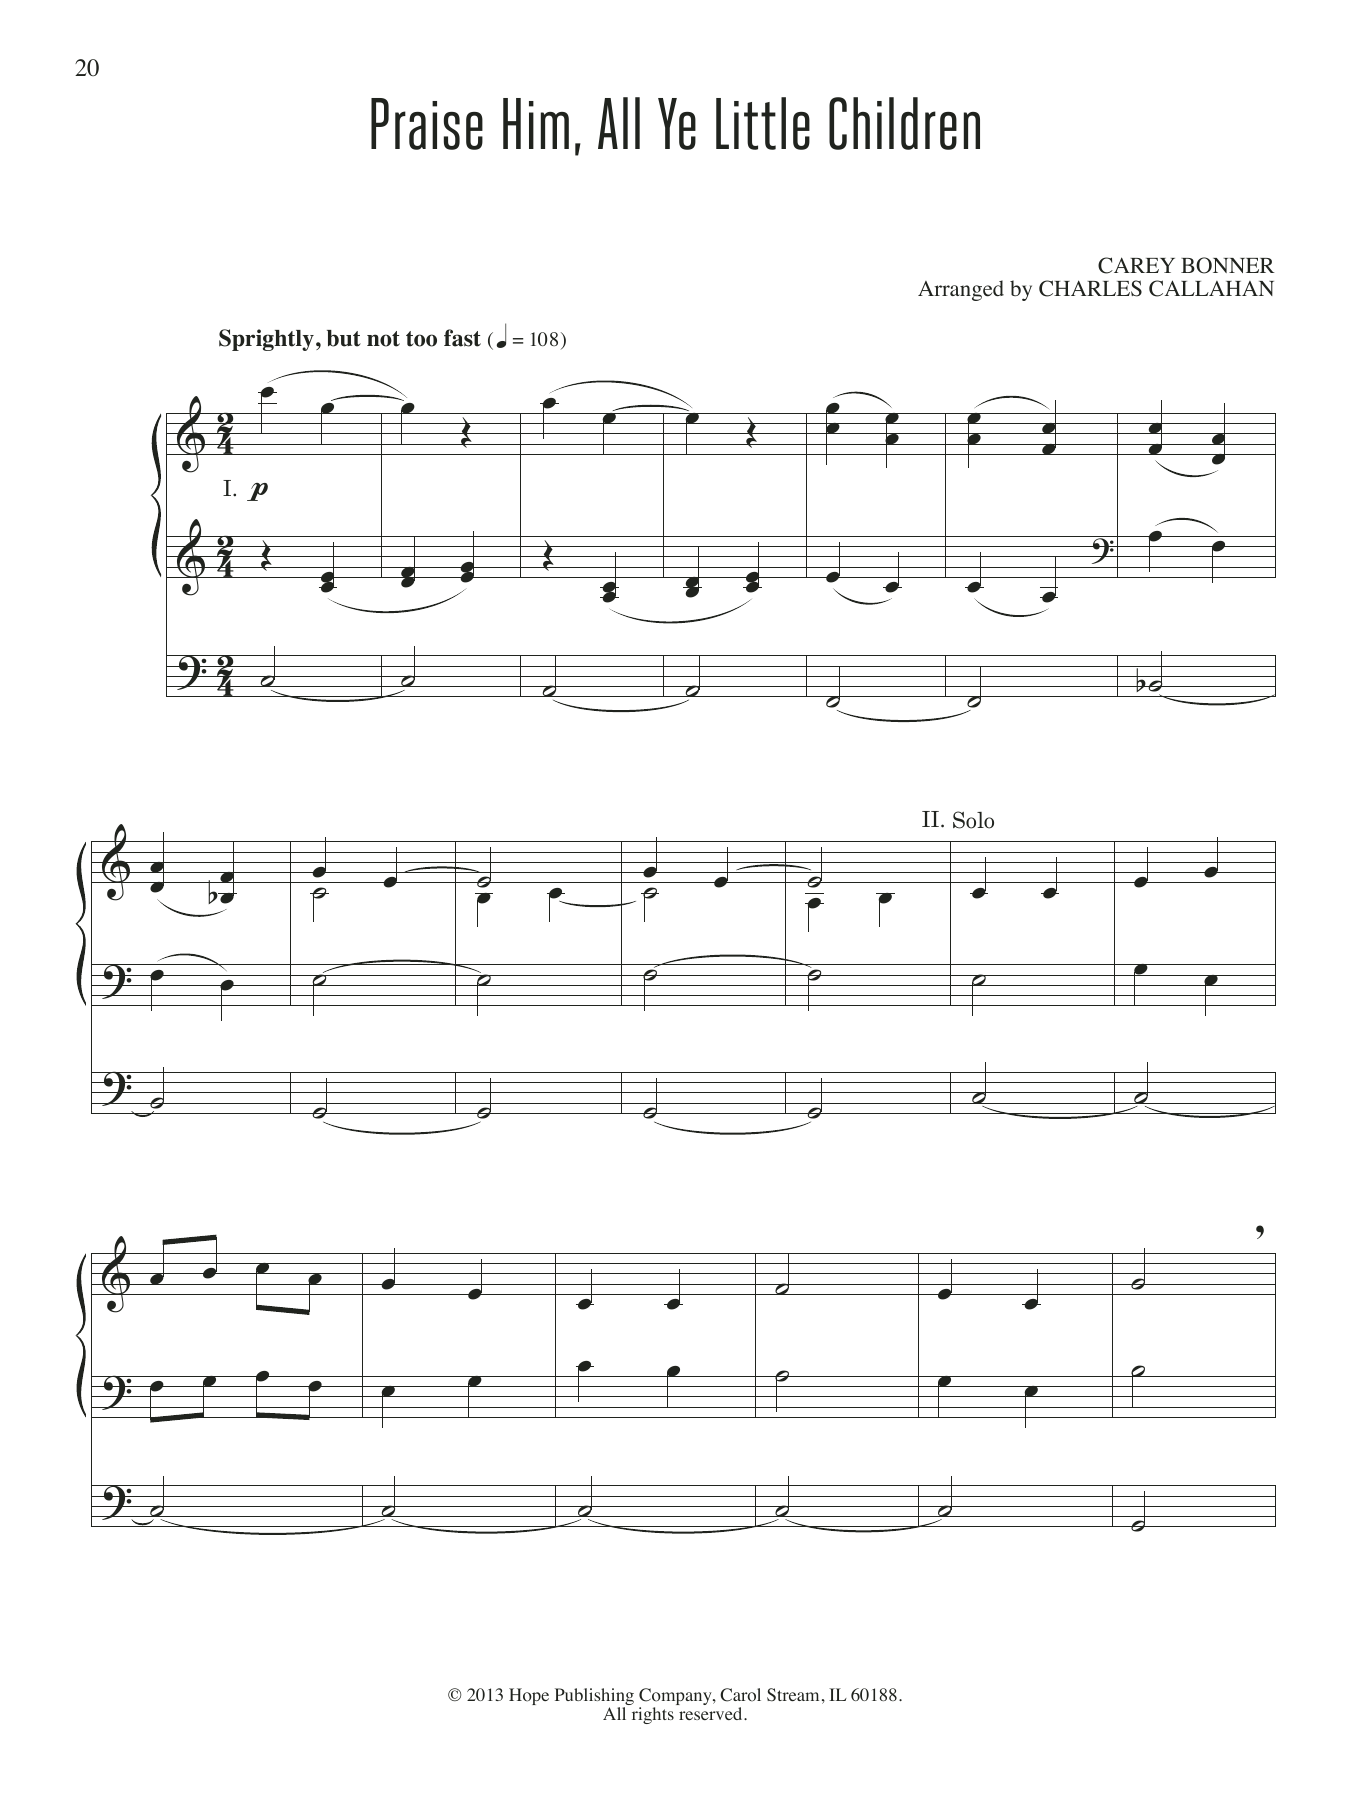 Charles Callahan Praise Him, All Ye Little Children Sheet Music Notes & Chords for Organ - Download or Print PDF